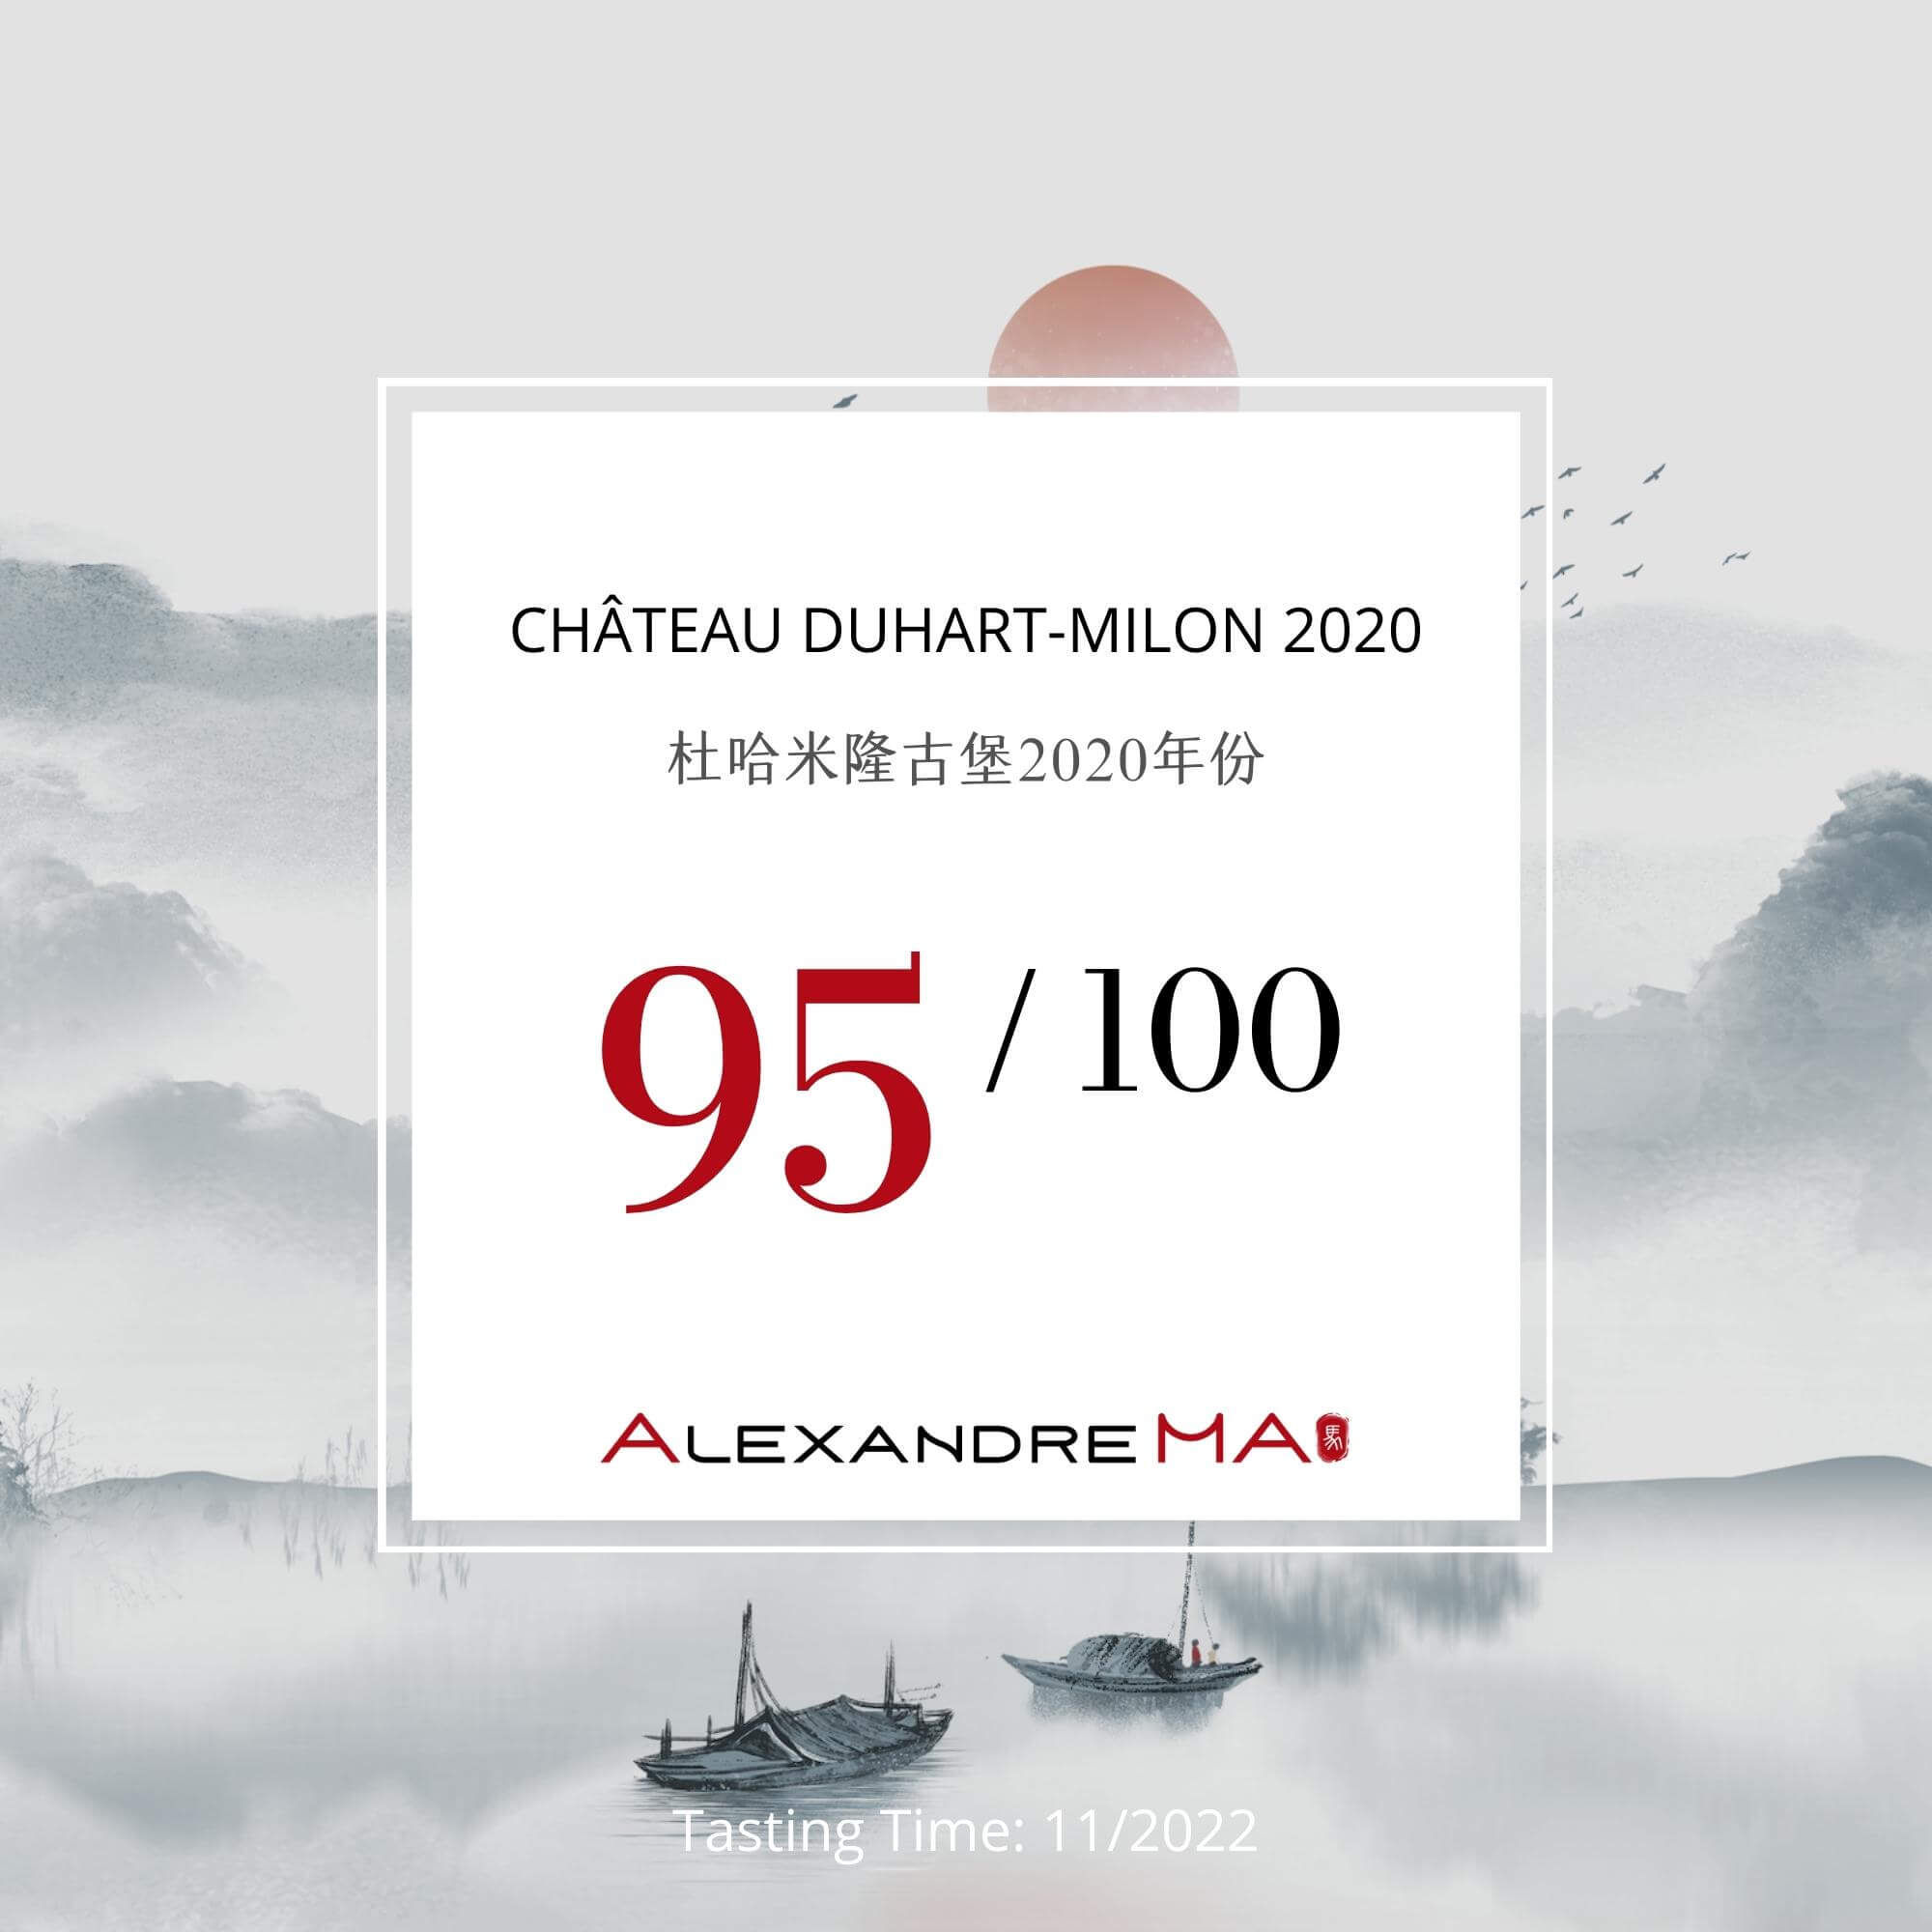 Château Duhart-Milon 2020 - Alexandre MA